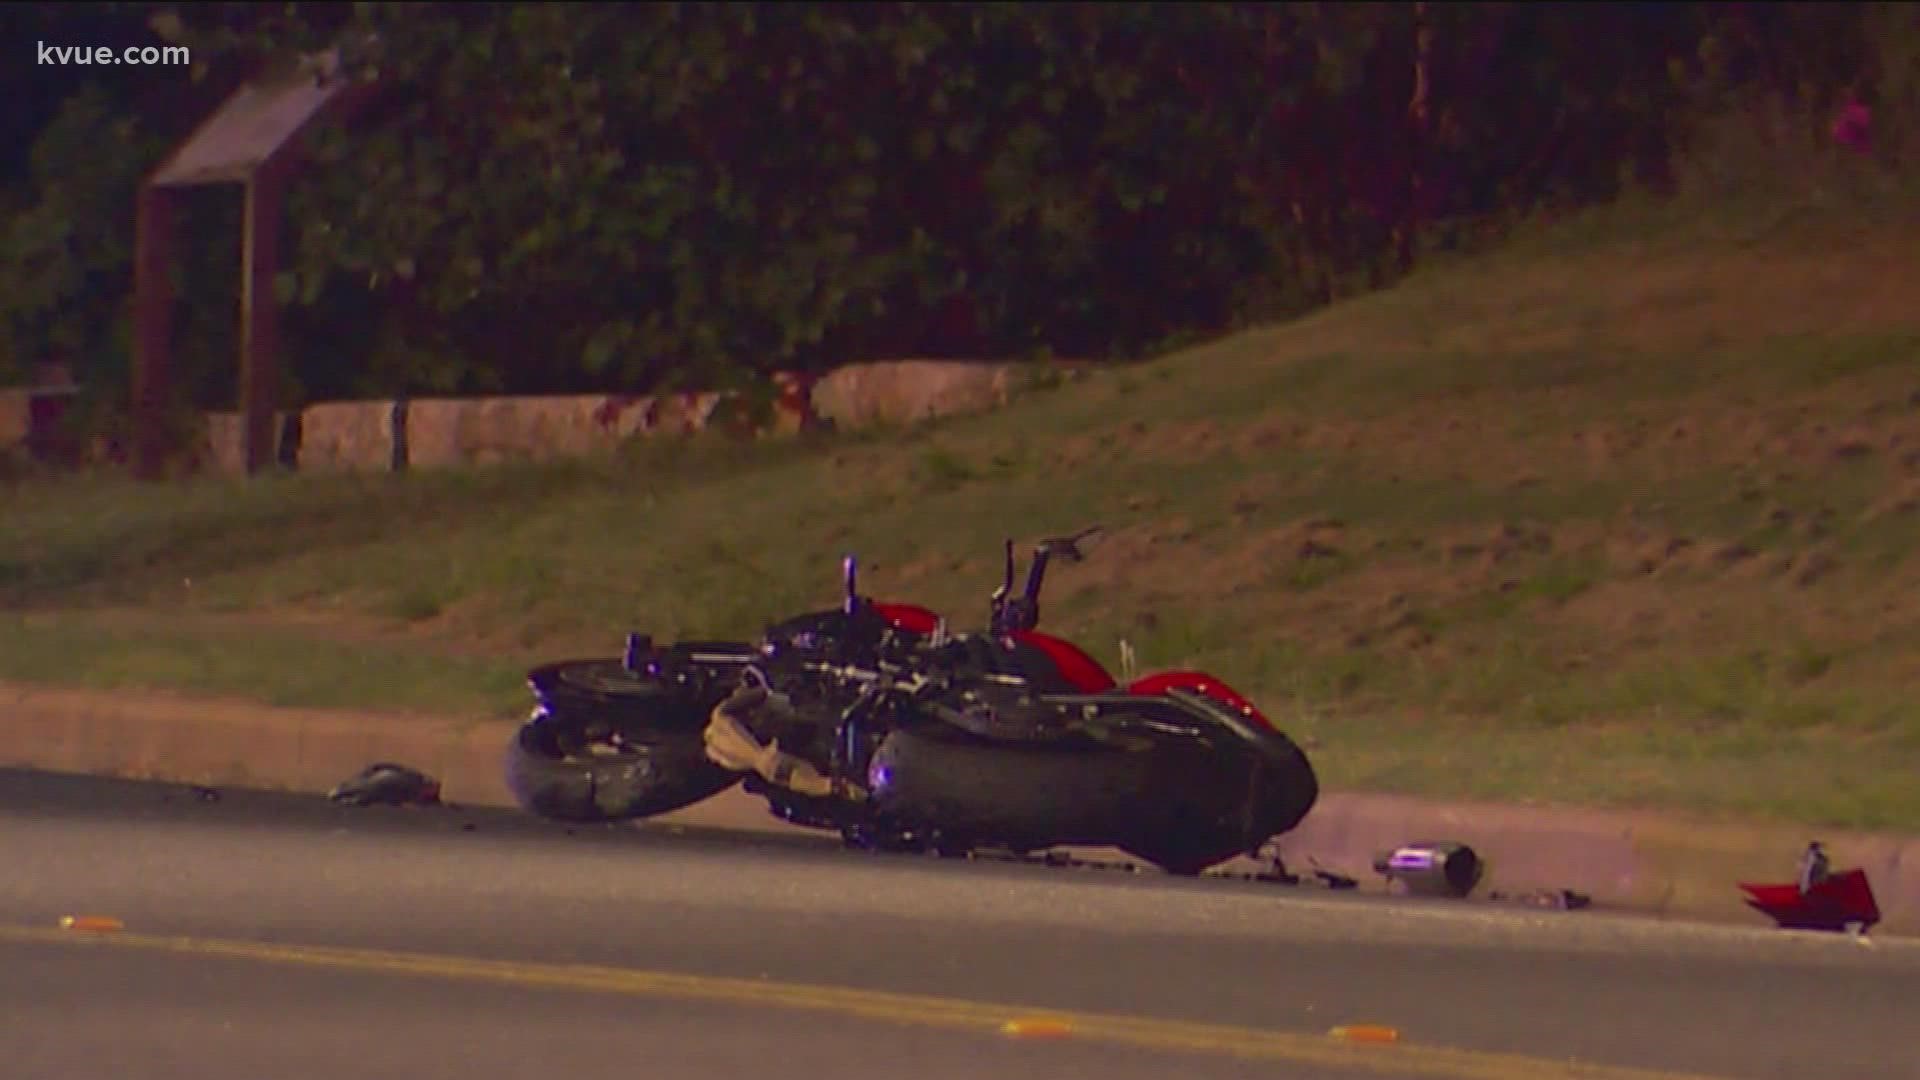 The crash happened on Lamar Boulevard near San Gabrial Street in Central Austin.